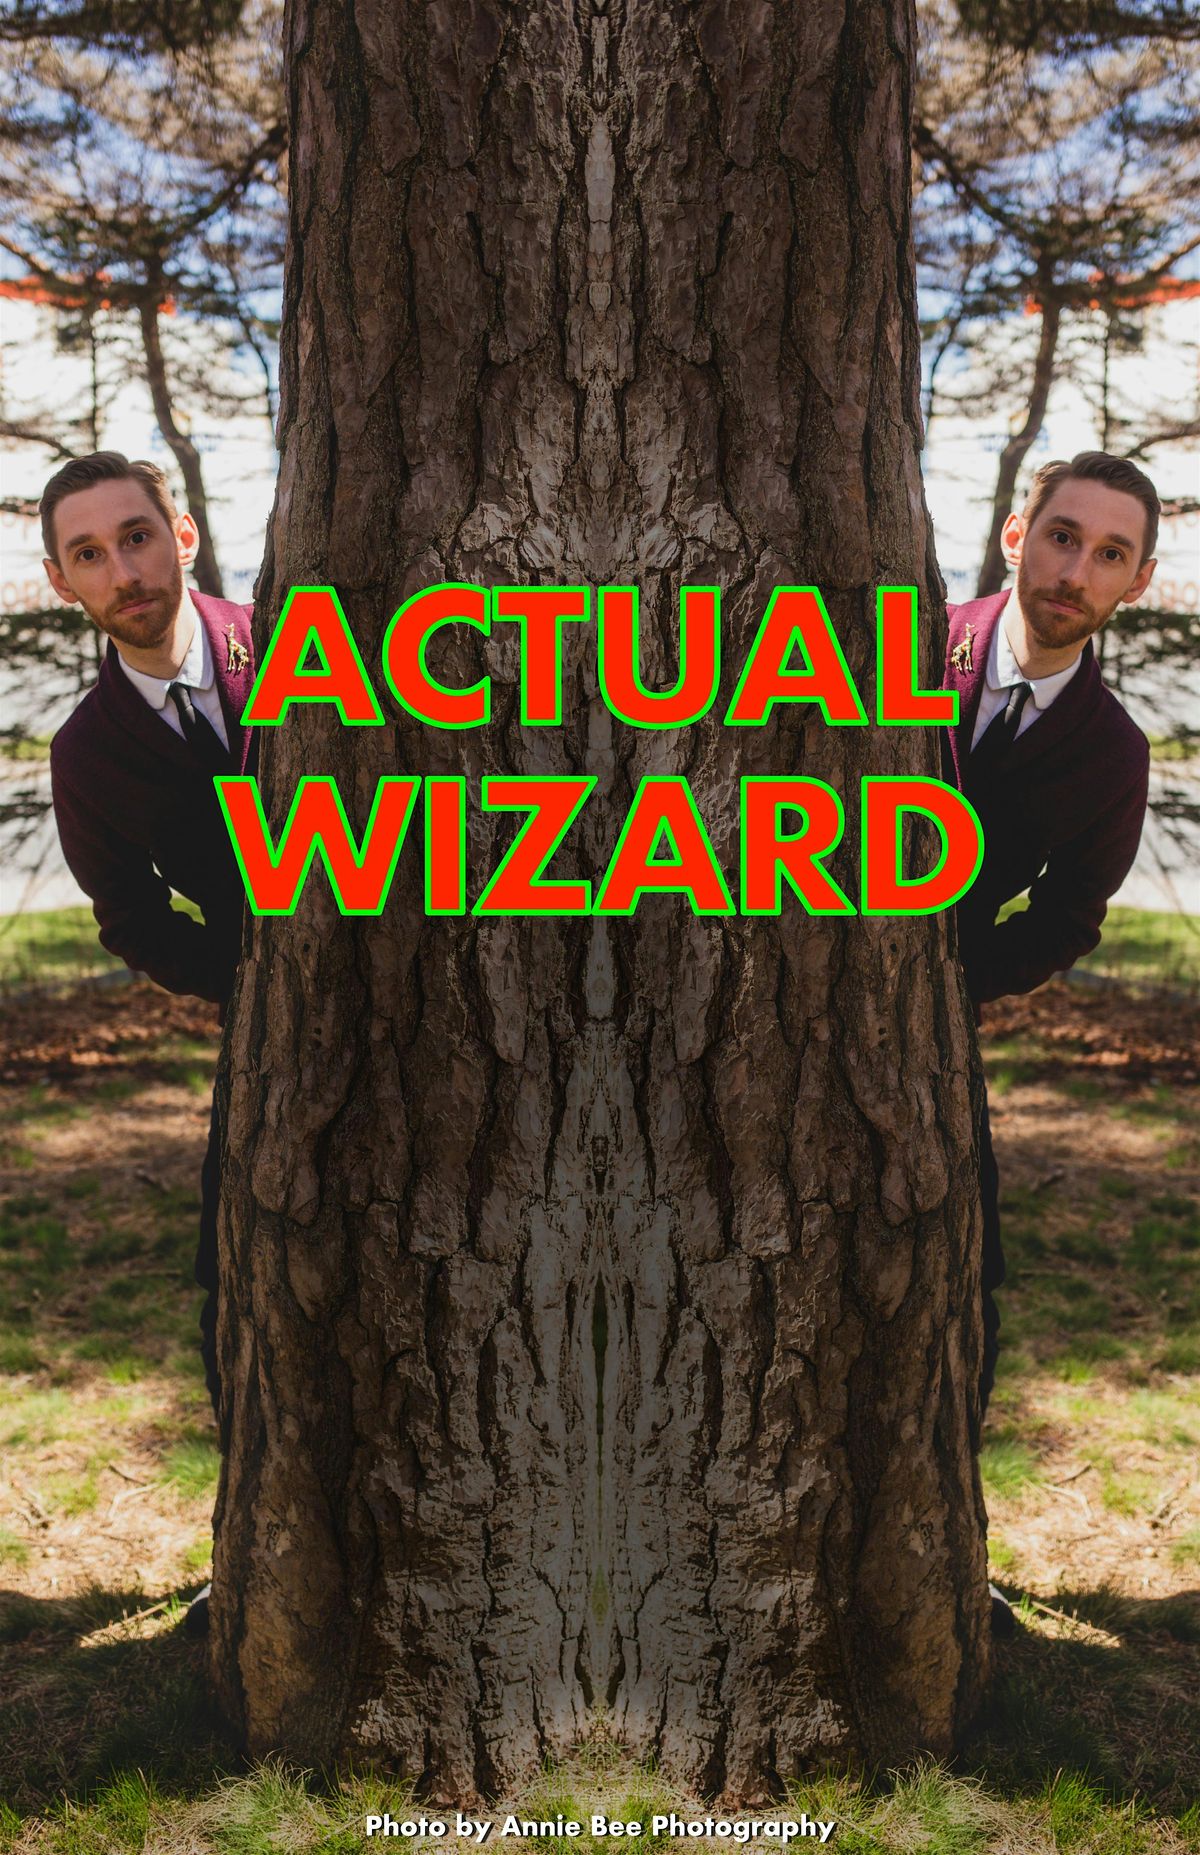 Actual Wizard \u2013 Live Magic Show at the Bus Stop Theatre